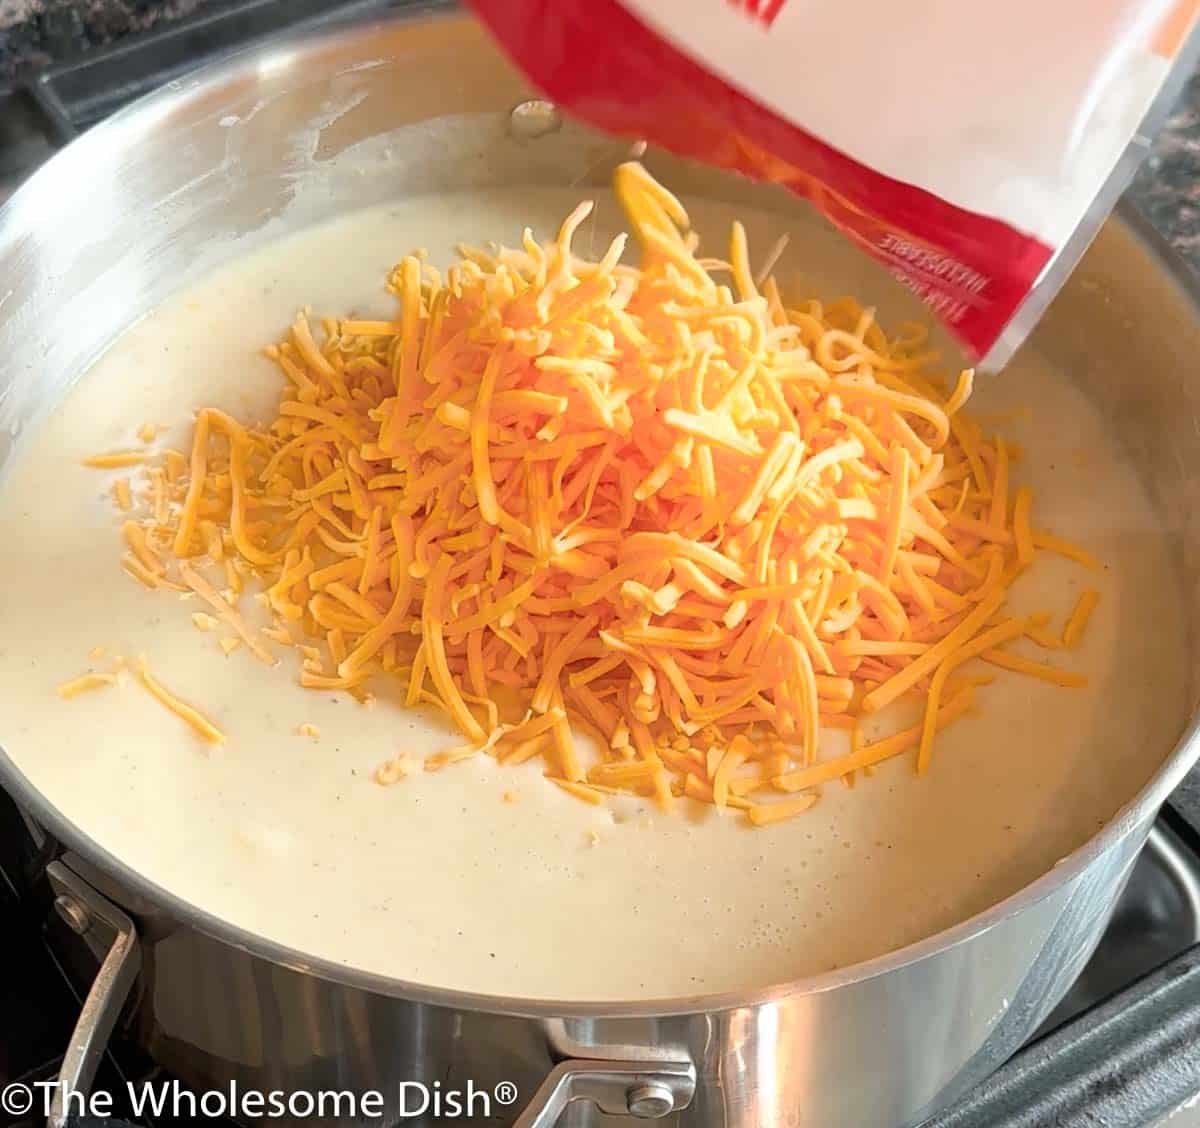 Cheddar Cheese Potato Soup Recipe - Amanda's Cookin' - Soup